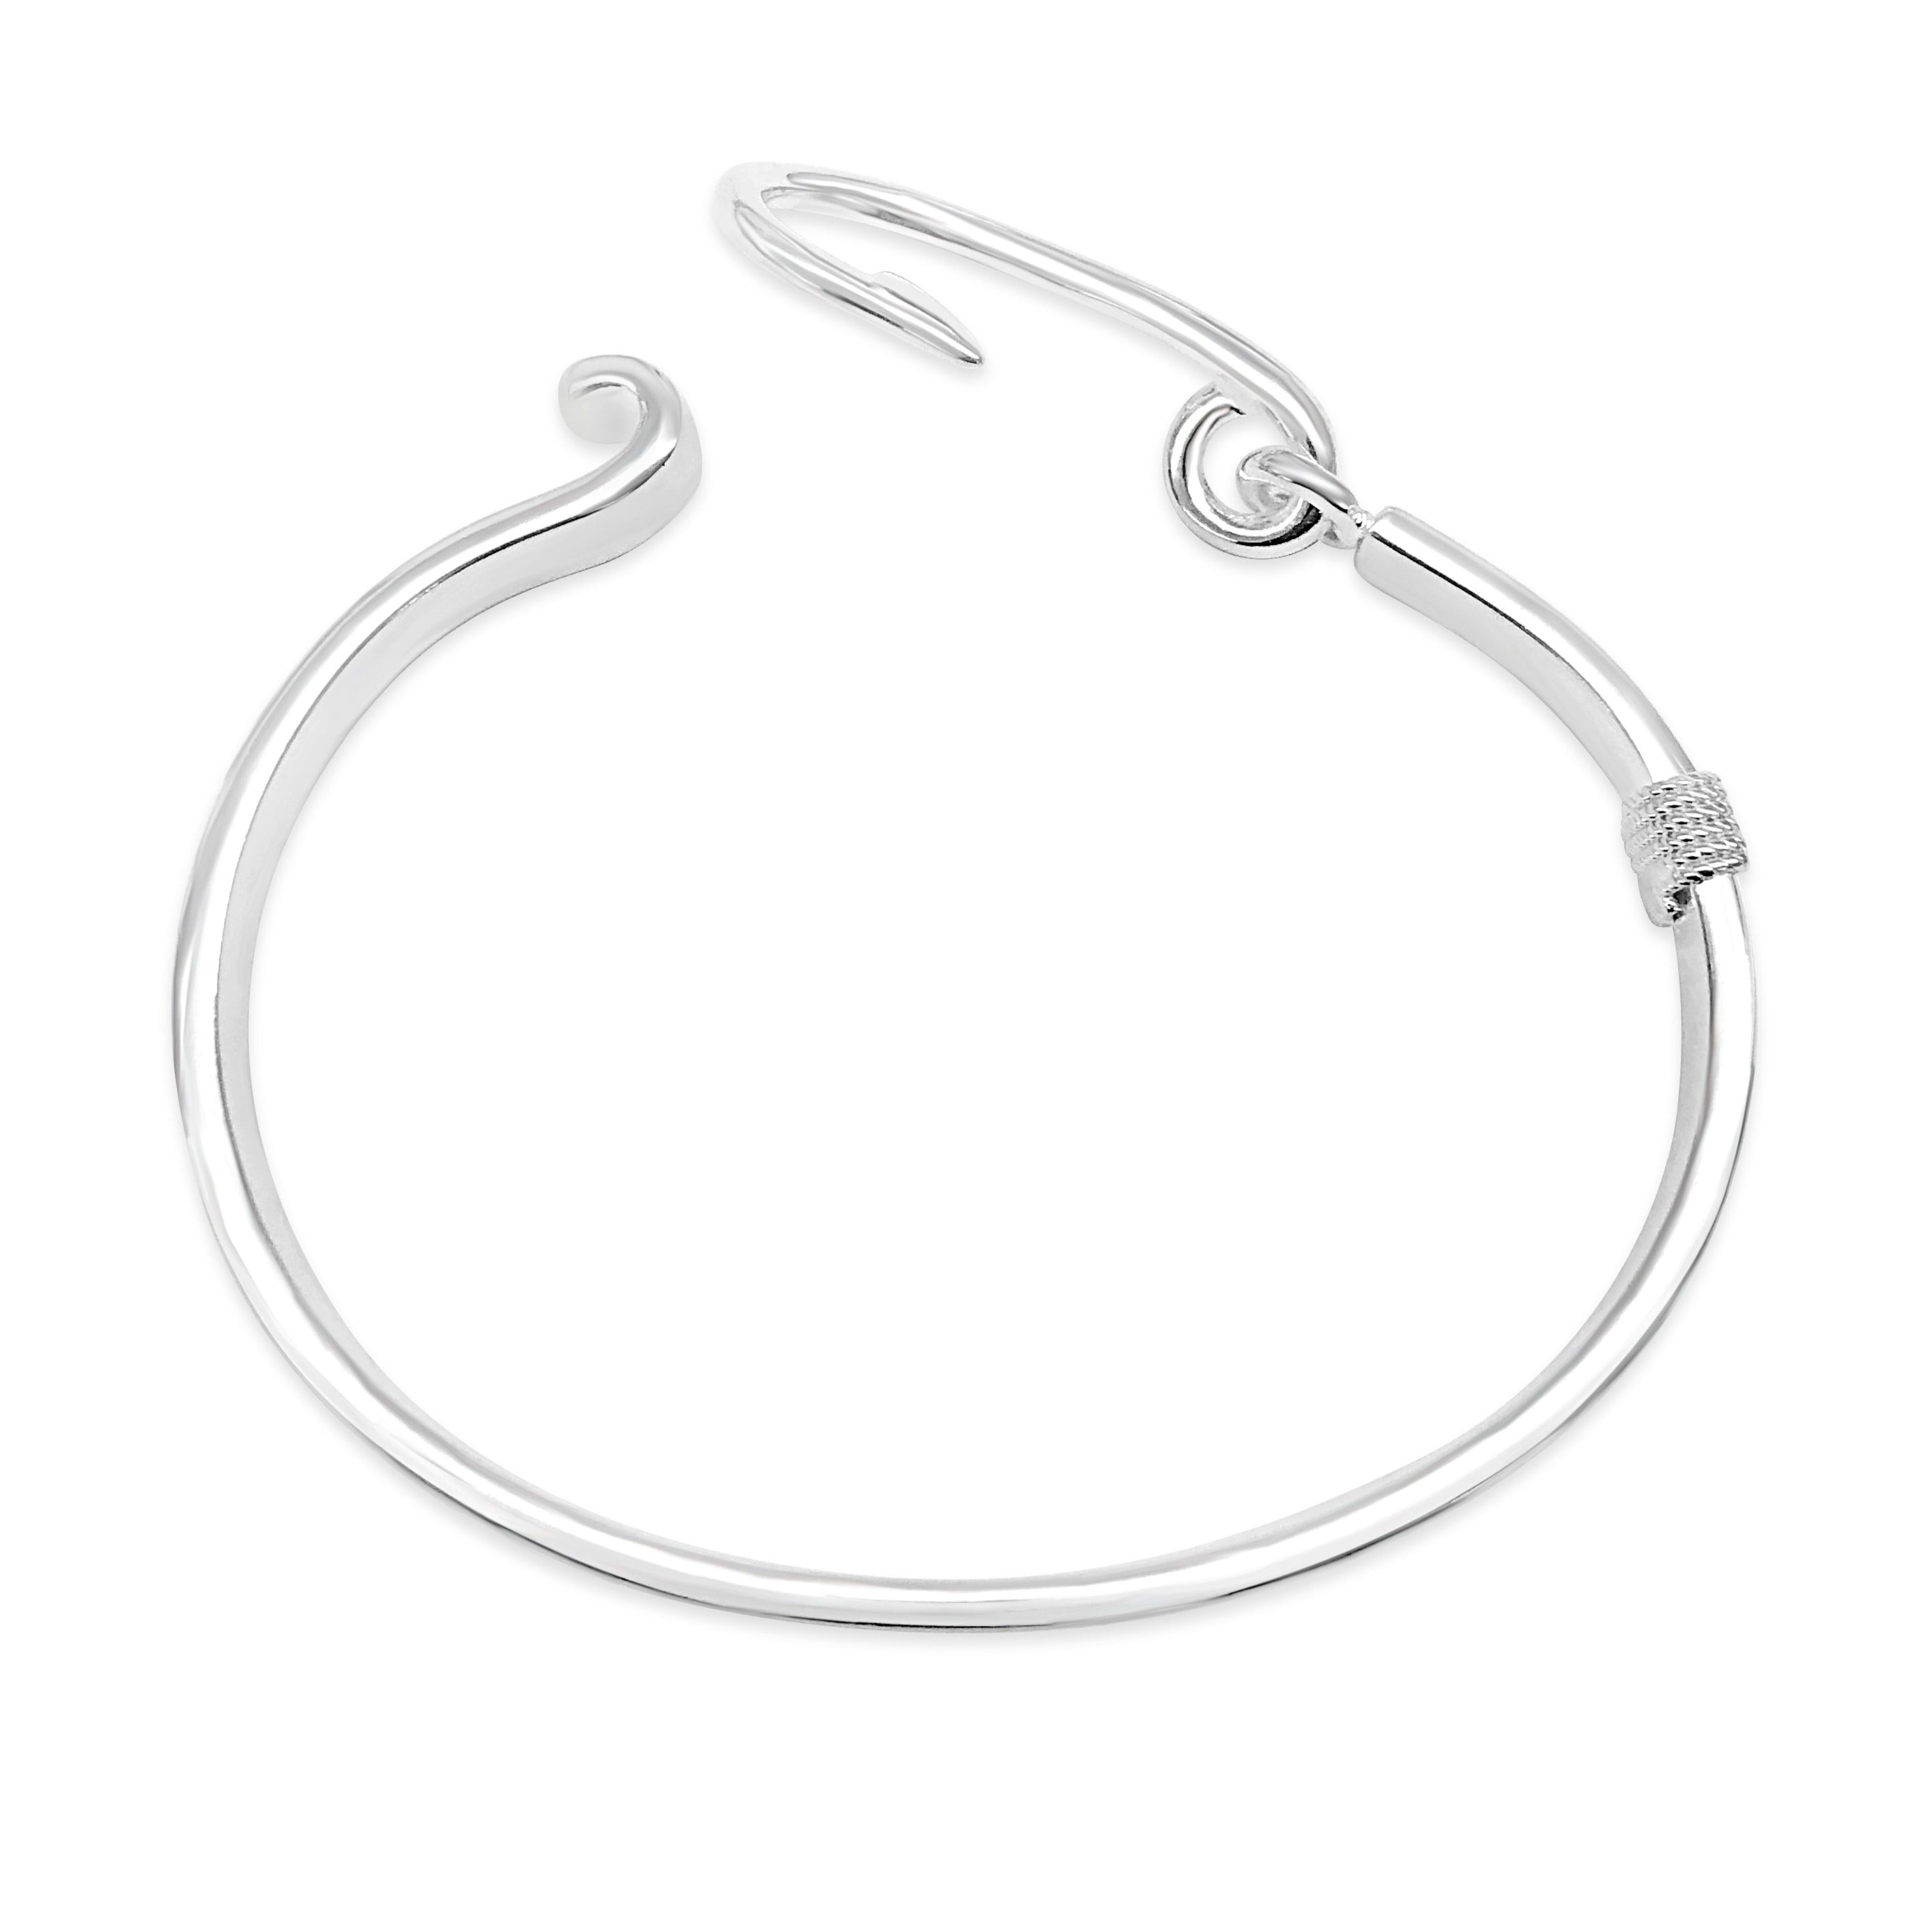 Cable Hoop Earrings in Sterling Silver, 2in | David Yurman